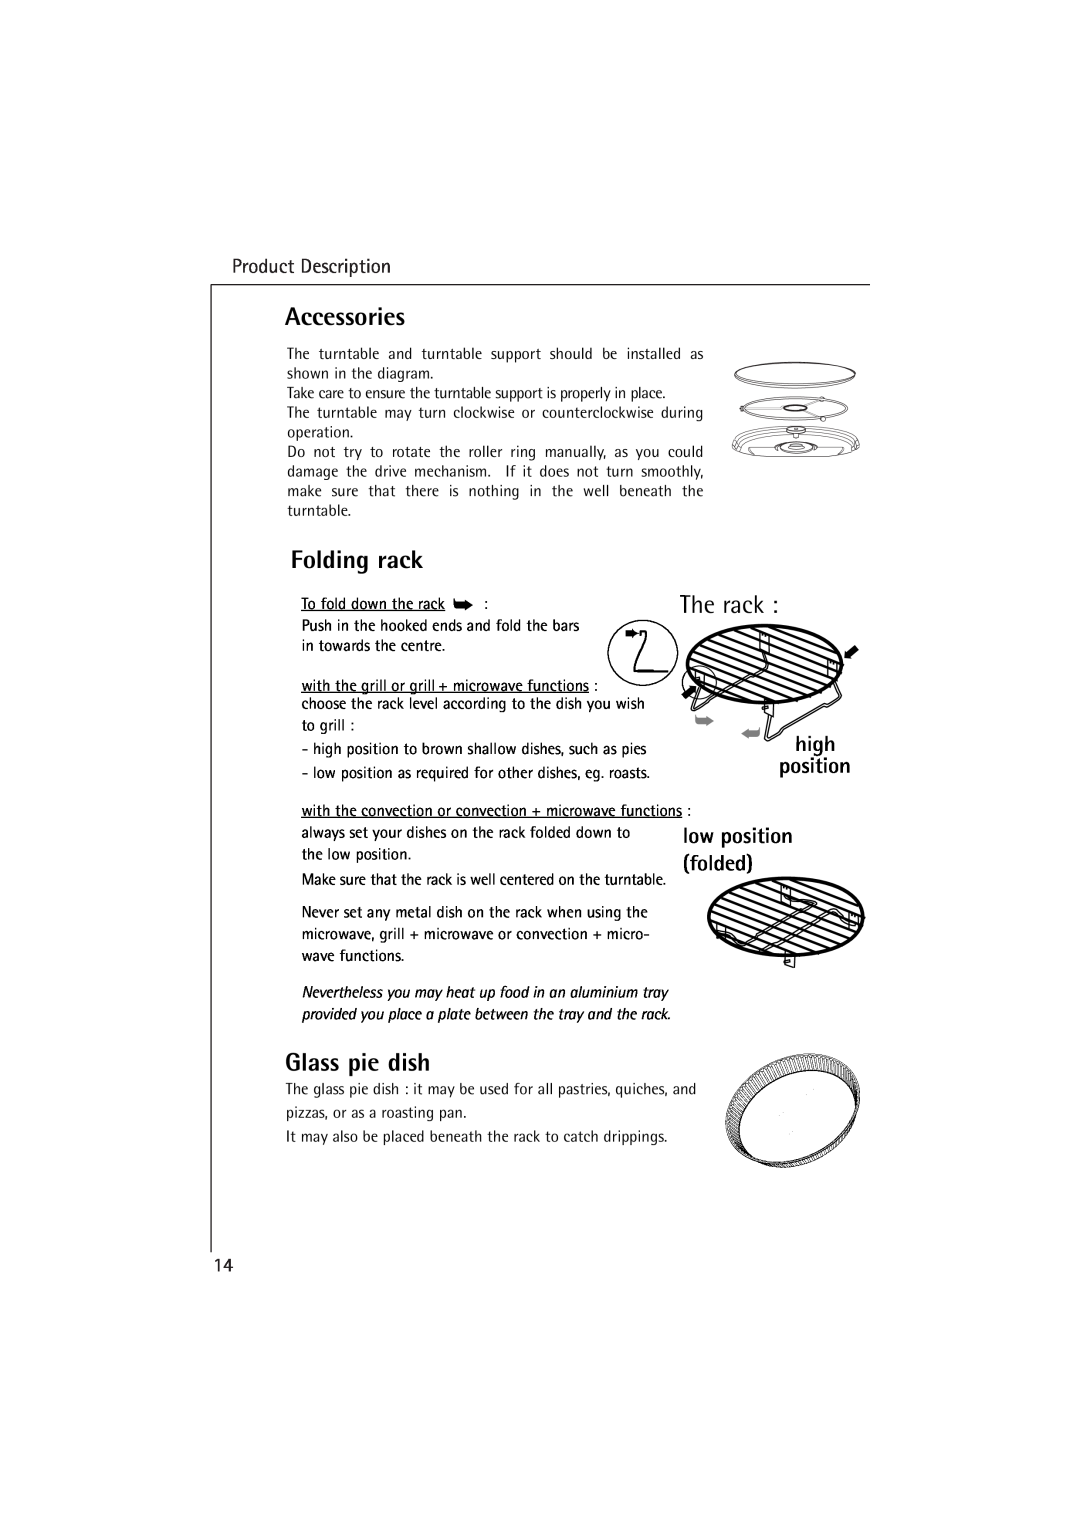 AEG MCC 663 instruction manual Accessories, Folding rack, Glass pie dish, Product Description, high, position, The rack 